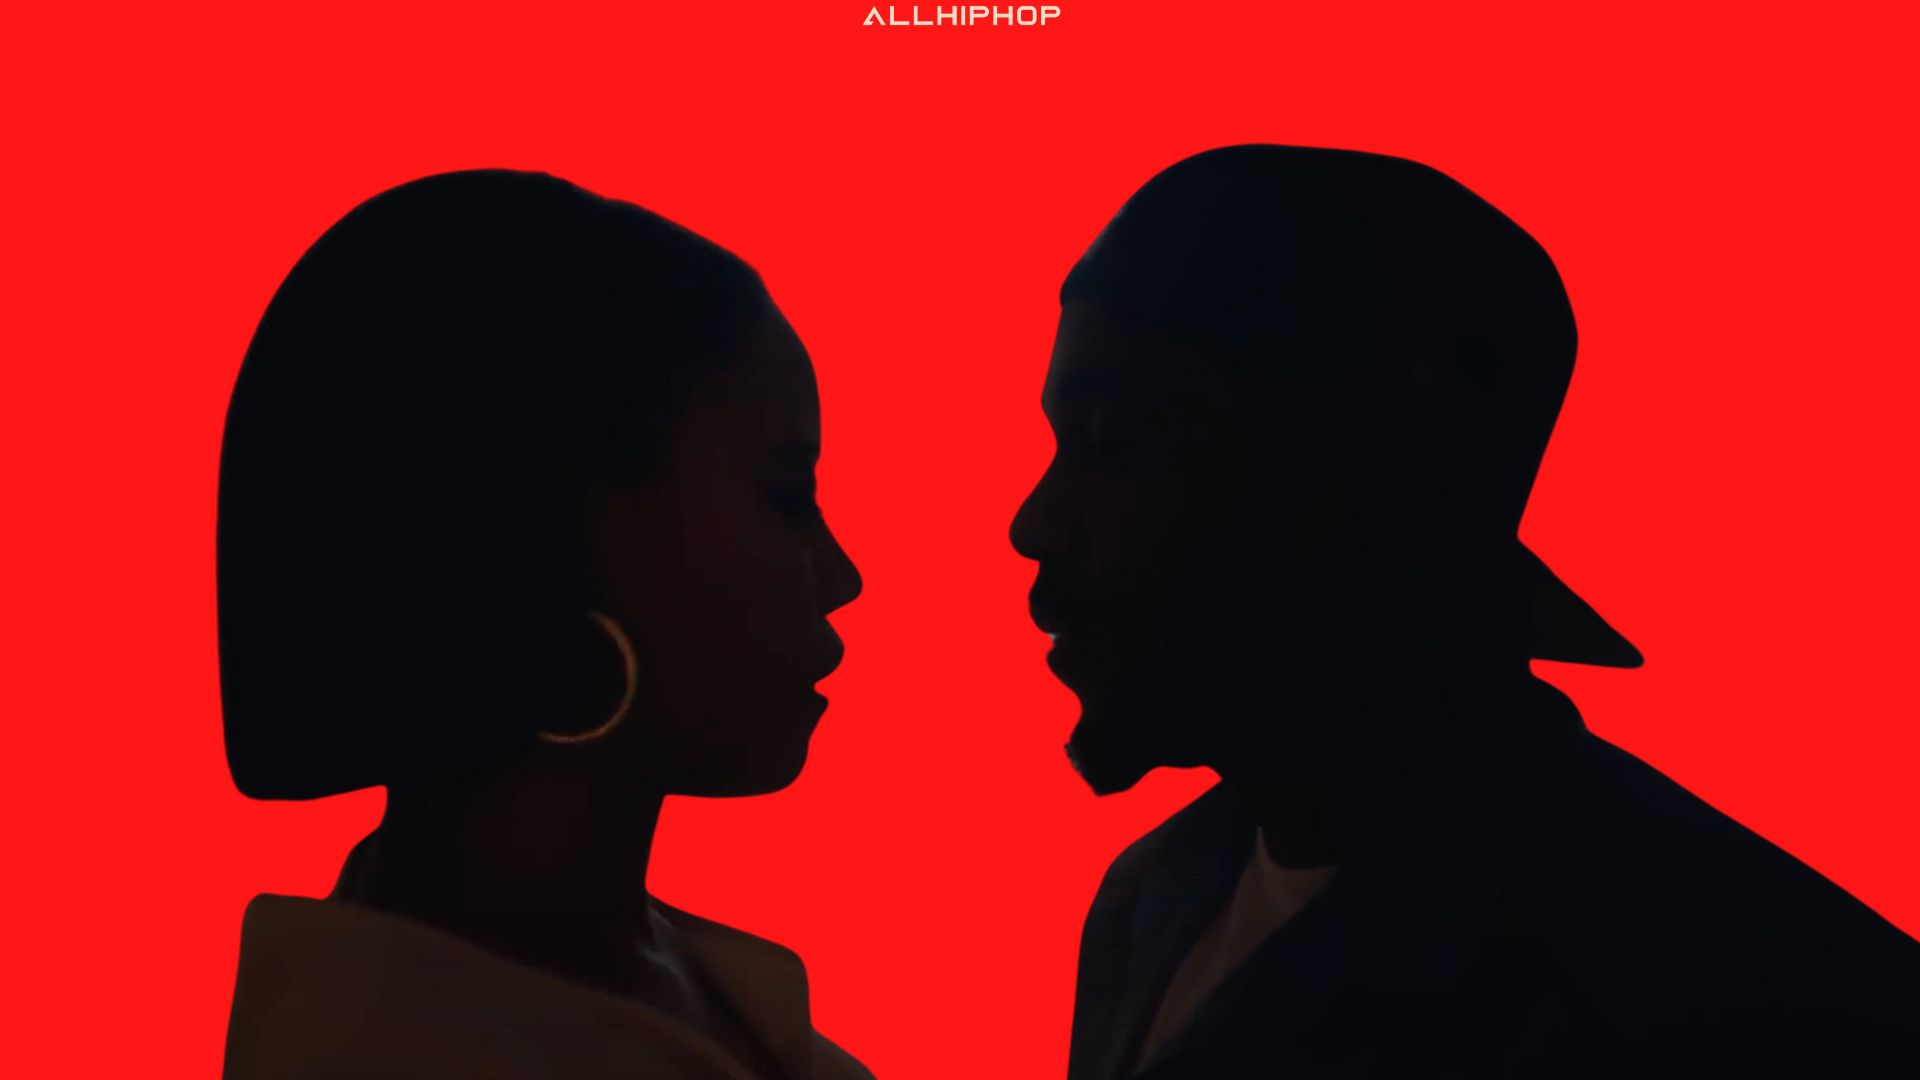 Kendrick Lamar “We Cry Together” - A Short Film